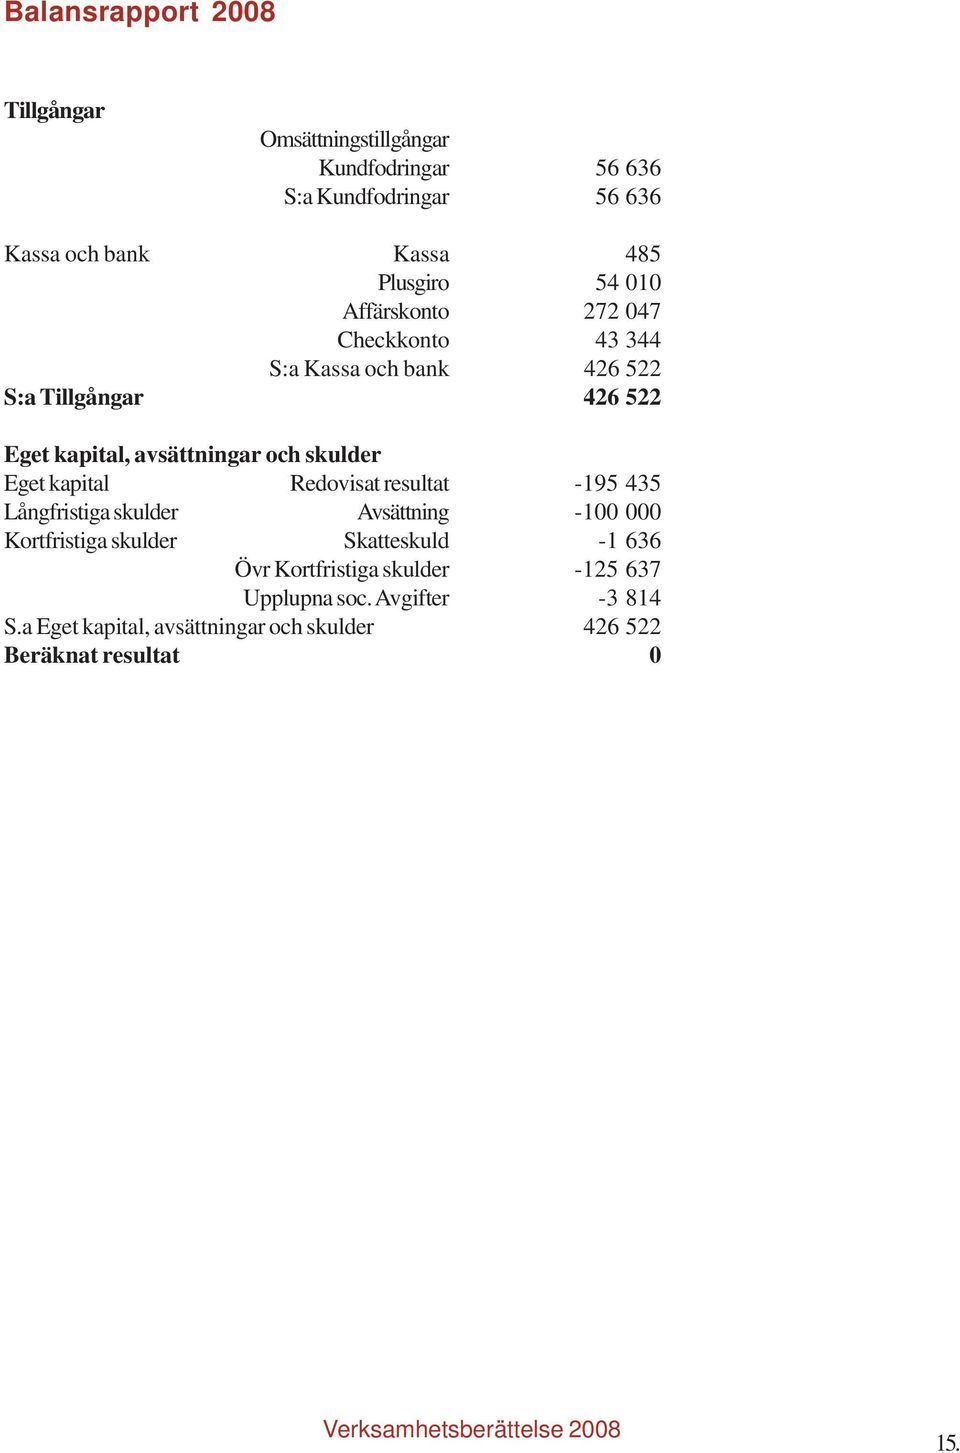 skulder Eget kapital Redovisat resultat -195 435 Långfristiga skulder Avsättning -100 000 Kortfristiga skulder Skatteskuld -1 636